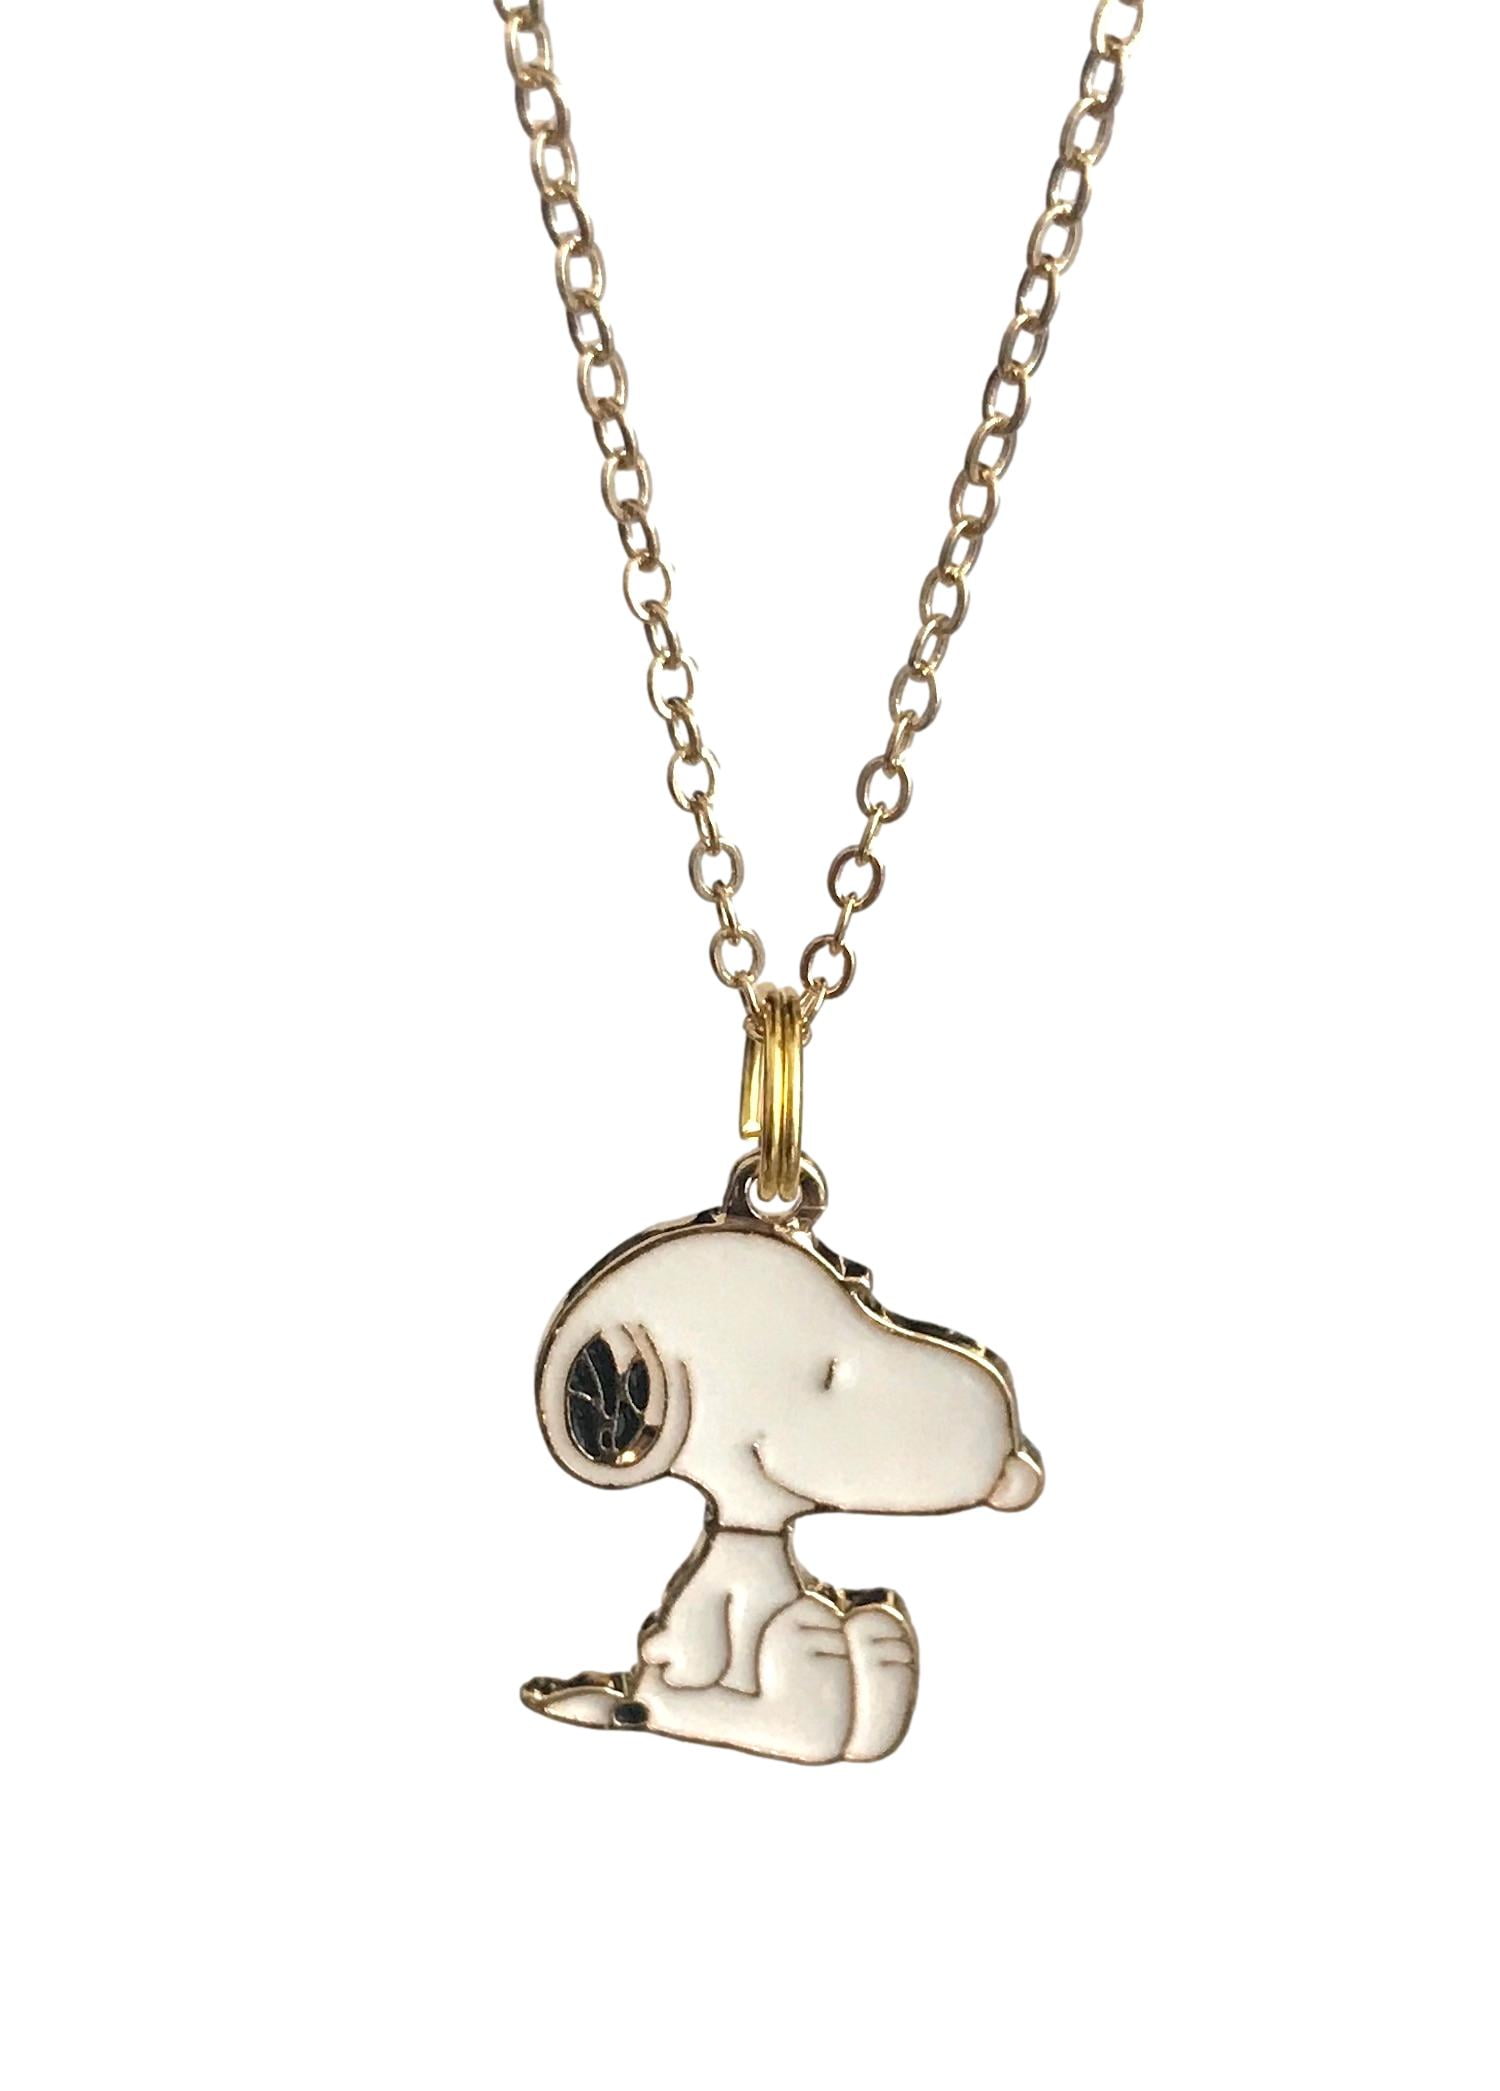 Handmade enamel charm necklace Dog heart pendant necklace Cute dog charm necklace